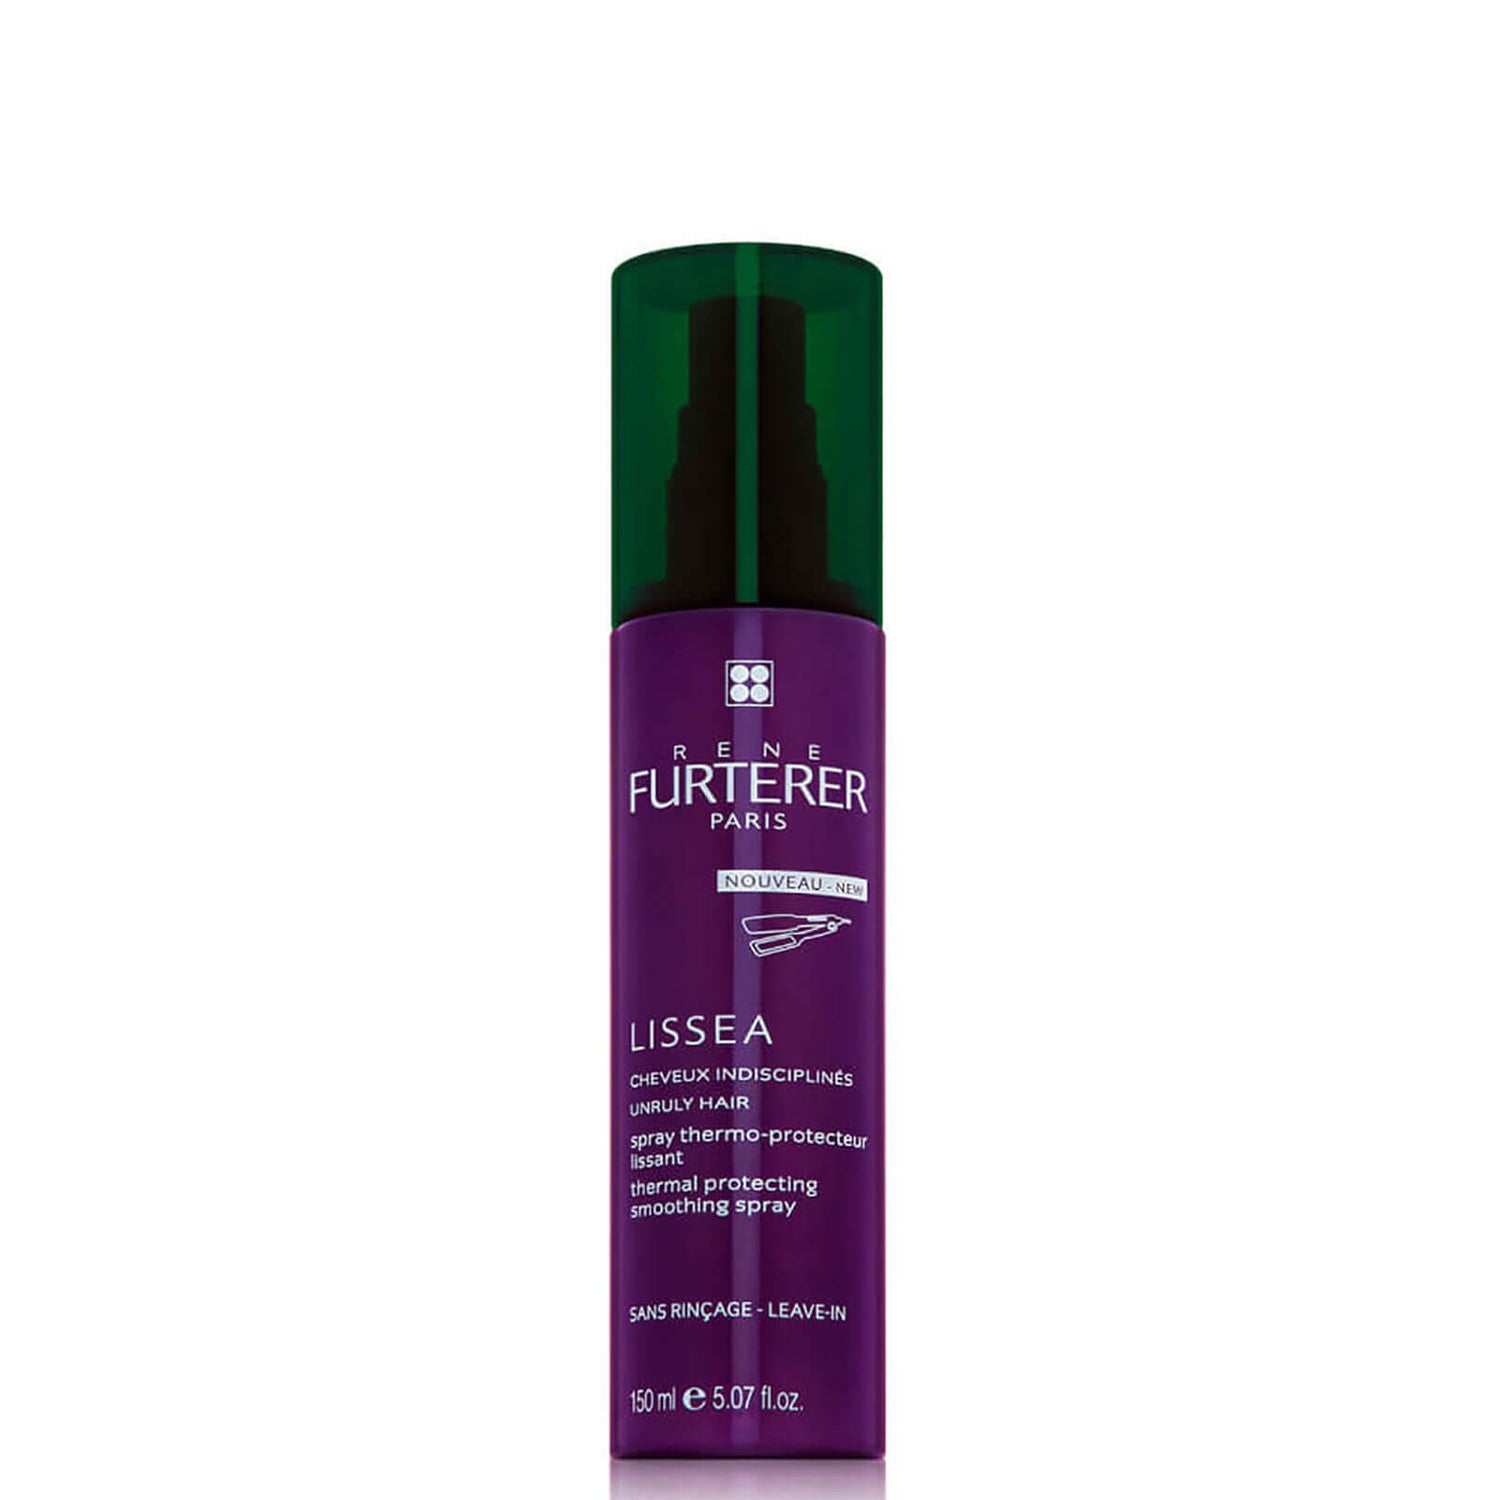 René Furterer Lissea Thermal Protecting Smoothing Spray 198 ml